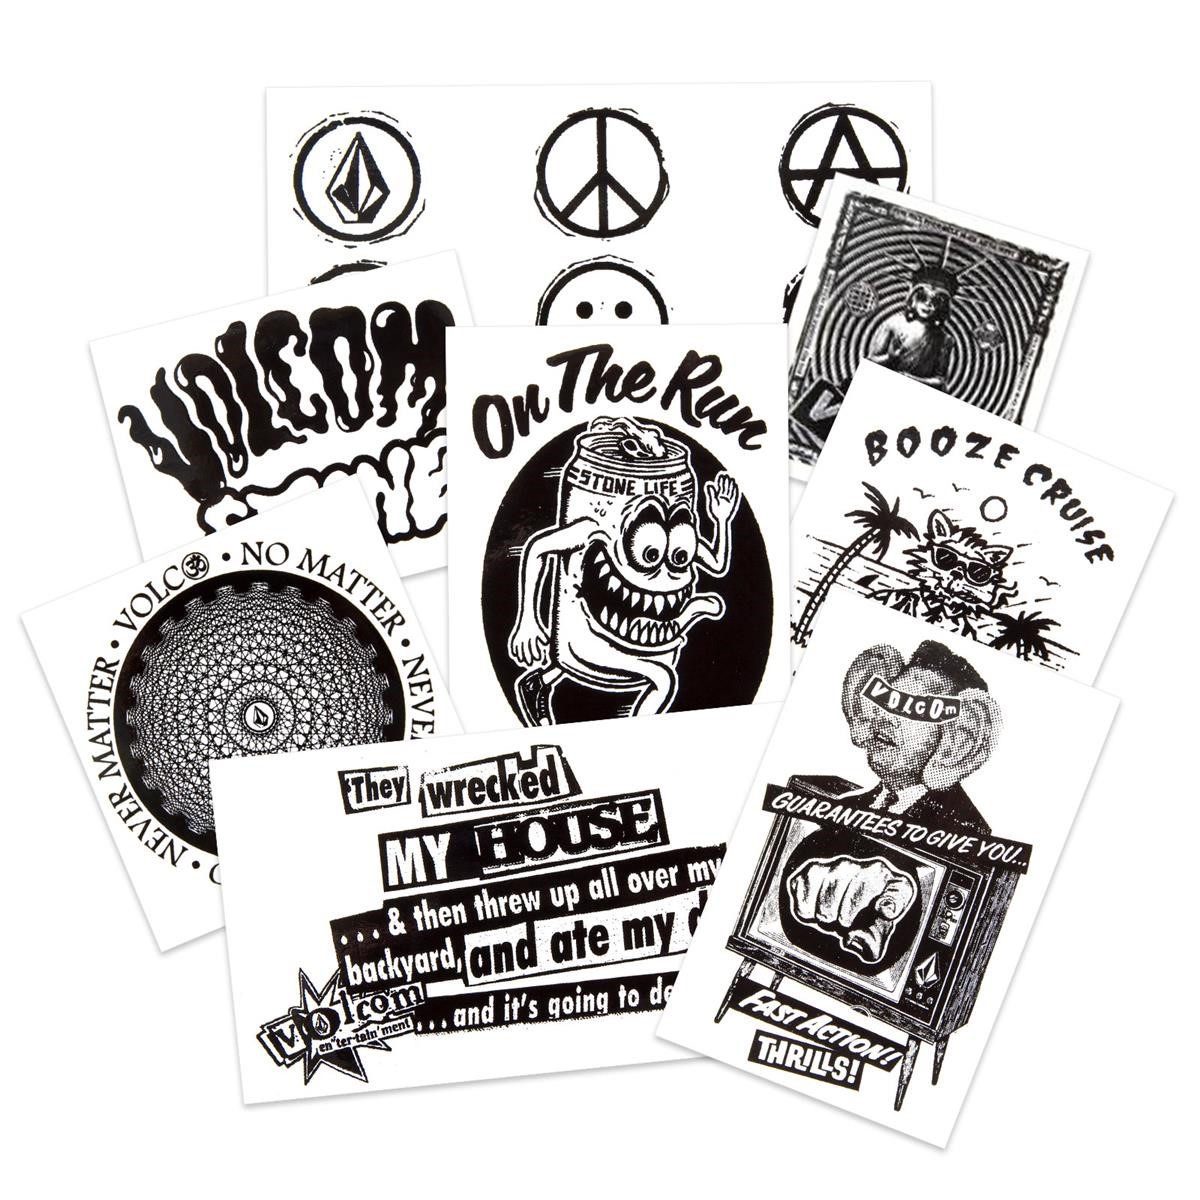 Volcom Bundle-Angebot Sticker Slimy Stone + Psychodelic + Destroy + On the Run + Pics + Booze Cruise + No Matter + Guarantees